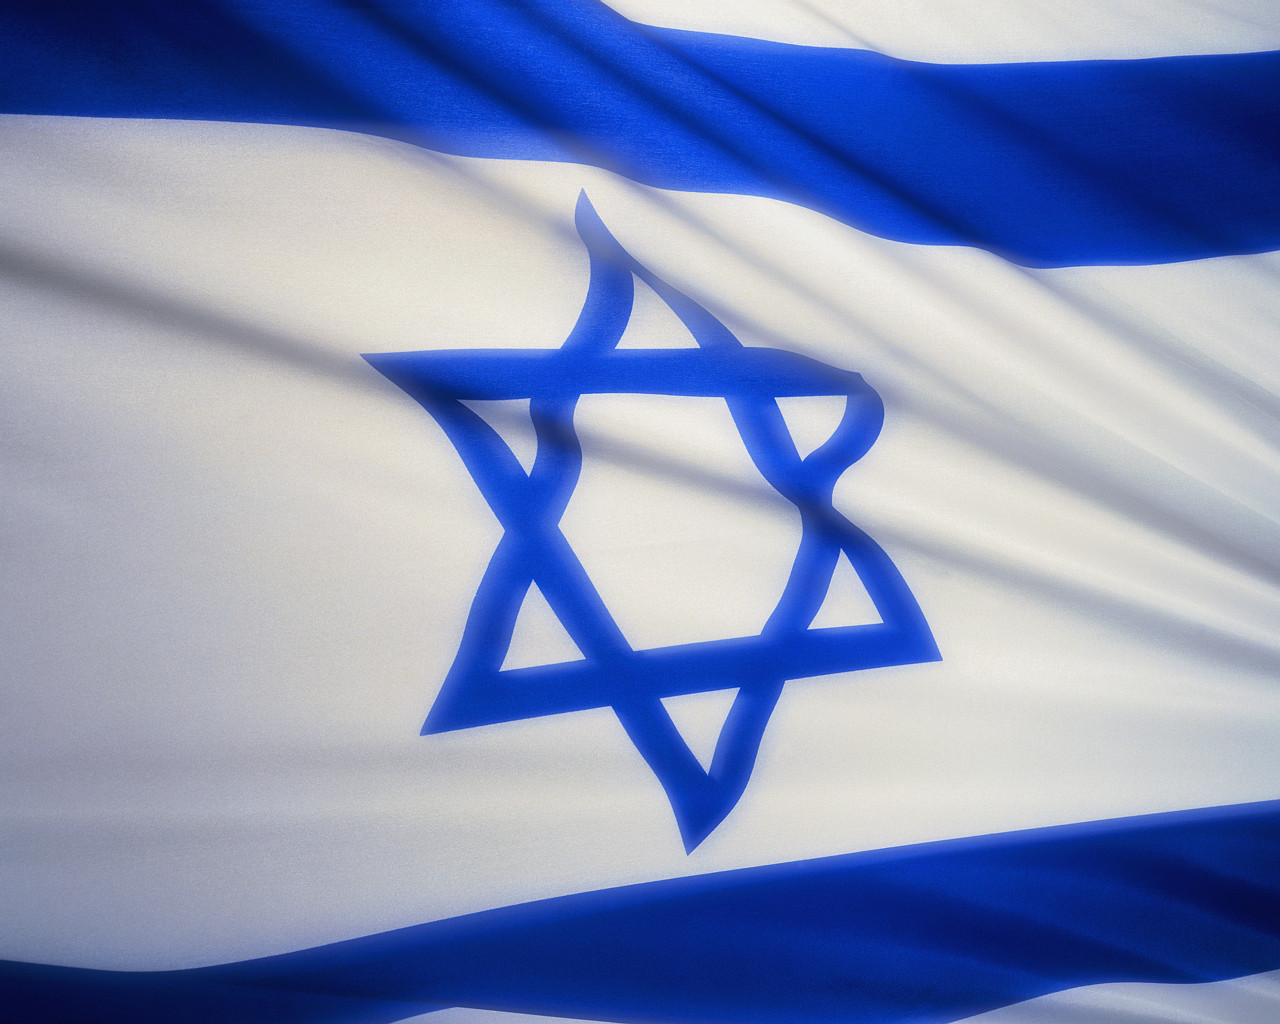 [israel_flag.jpg]